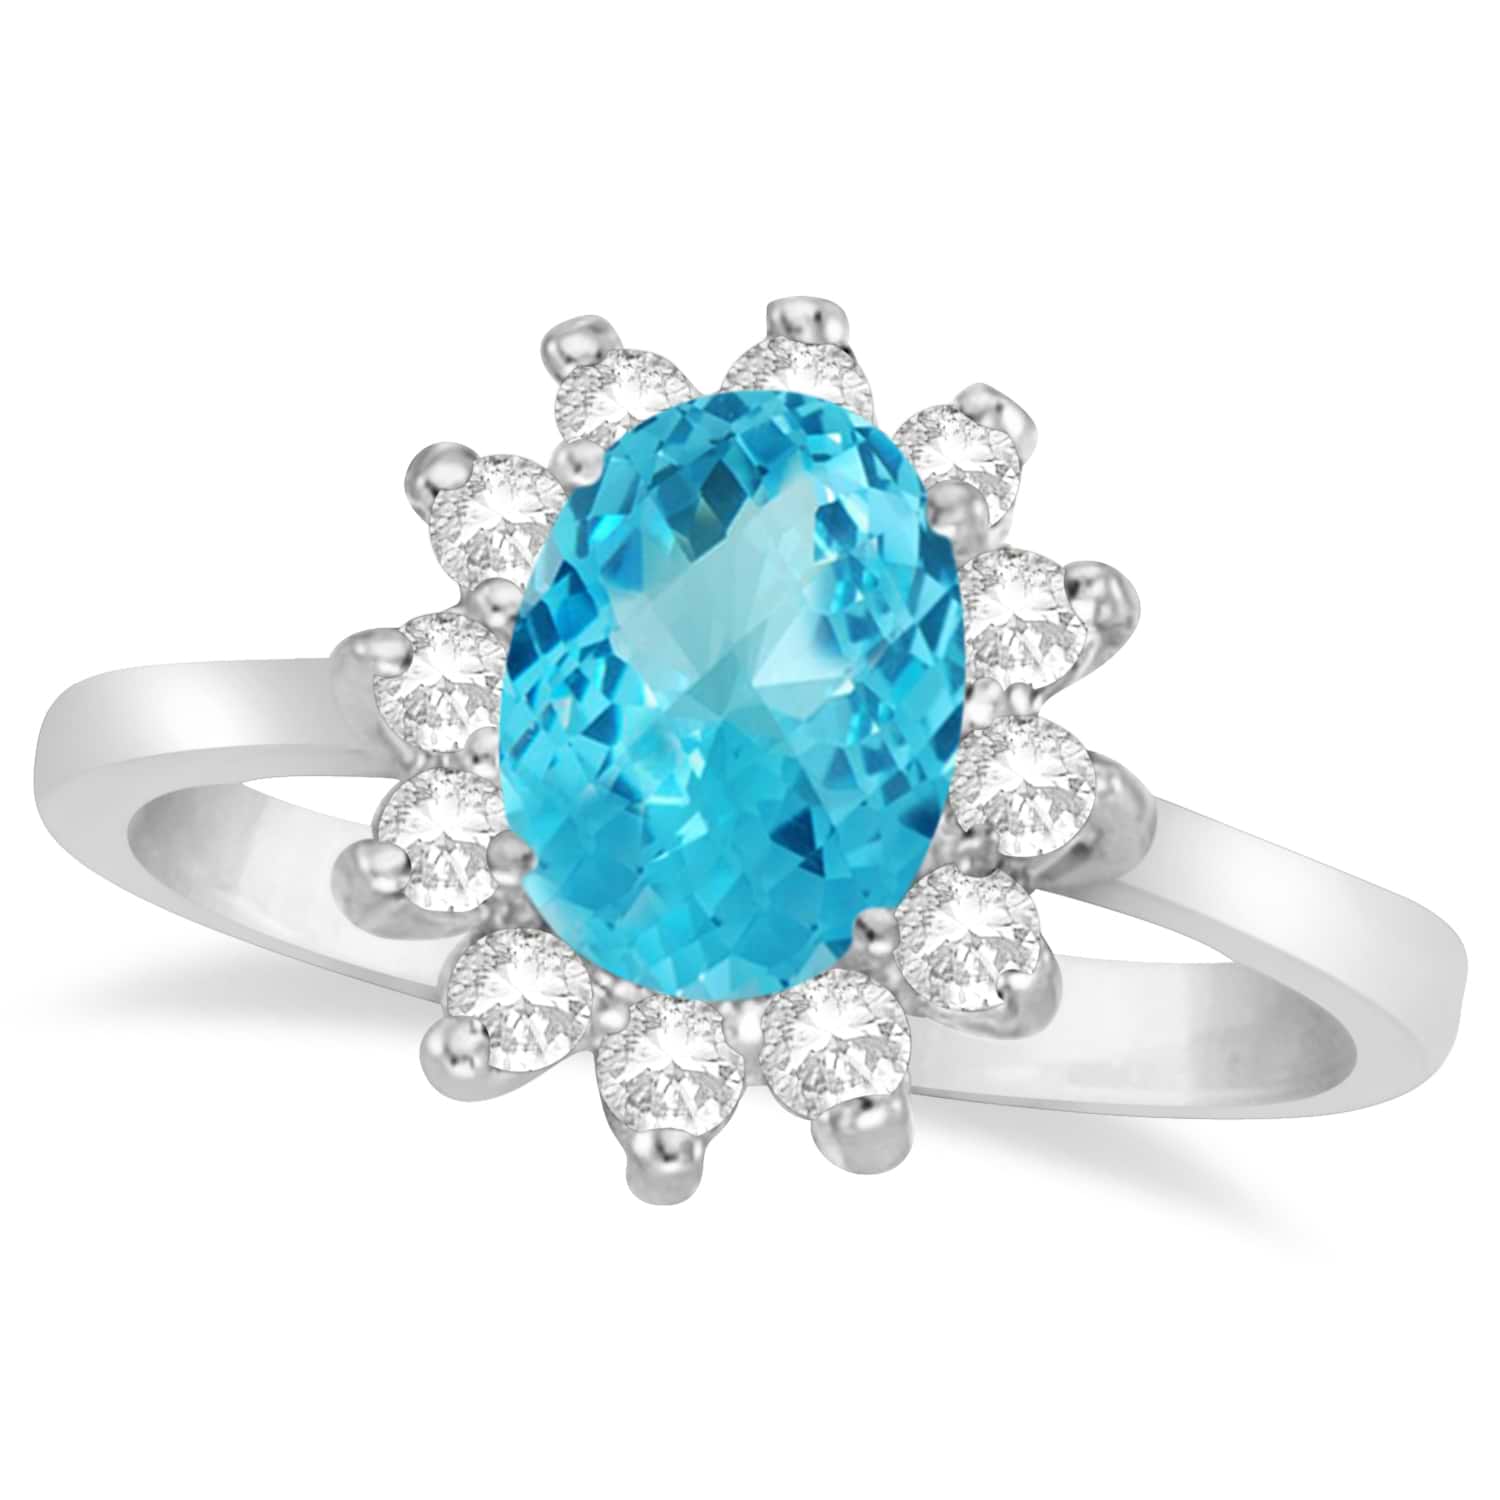 Lady Diana Oval Blue Topaz & Diamond Ring 14k White Gold (1.50 ctw)